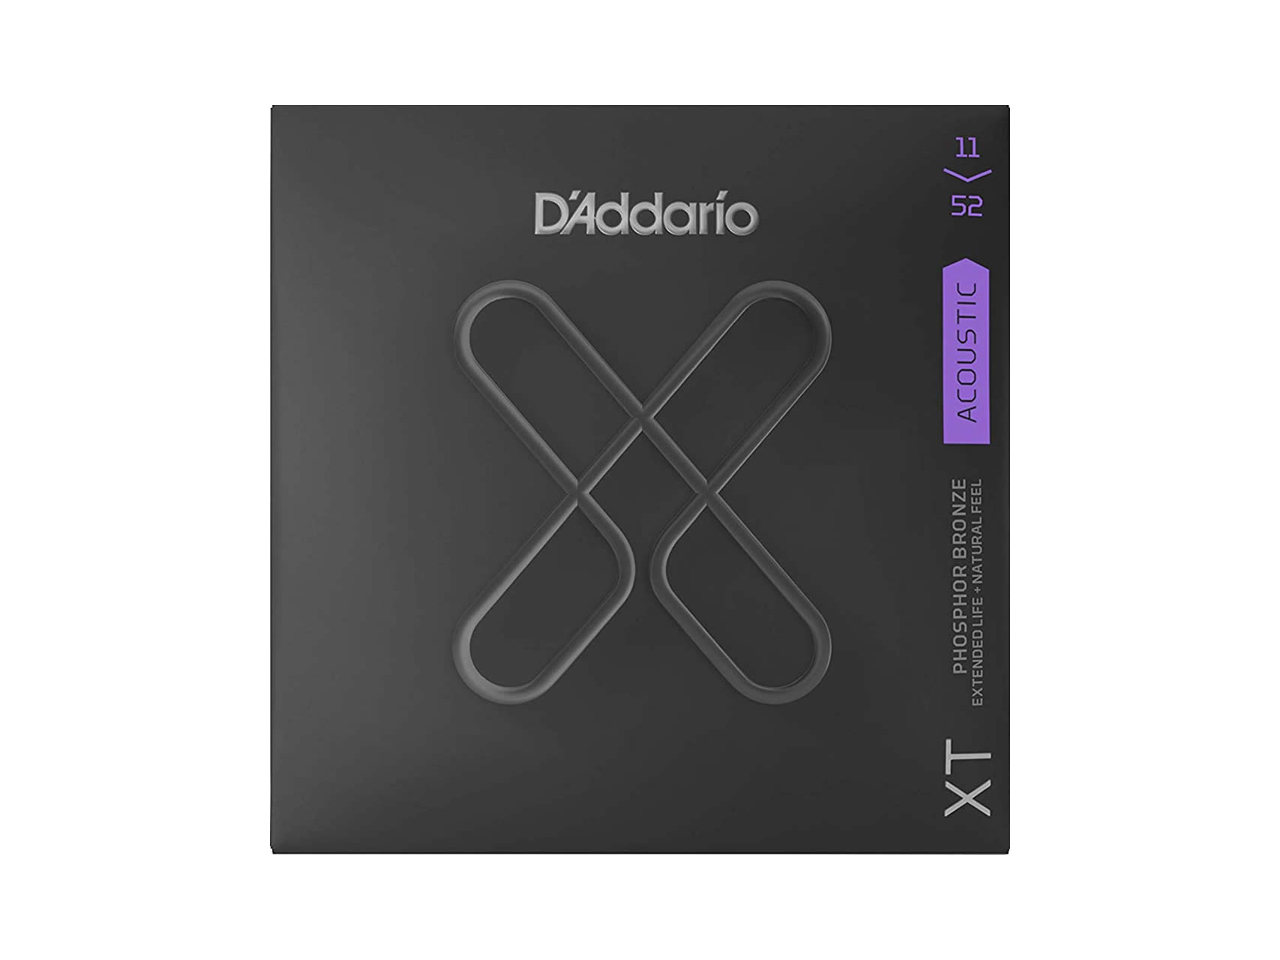 D'Addario(ダダリオ) XT ACOUSTIC PHOSPHOR BRONZE, EXTRA LIGHT / XTAPB1152 (アコースティックギター弦)